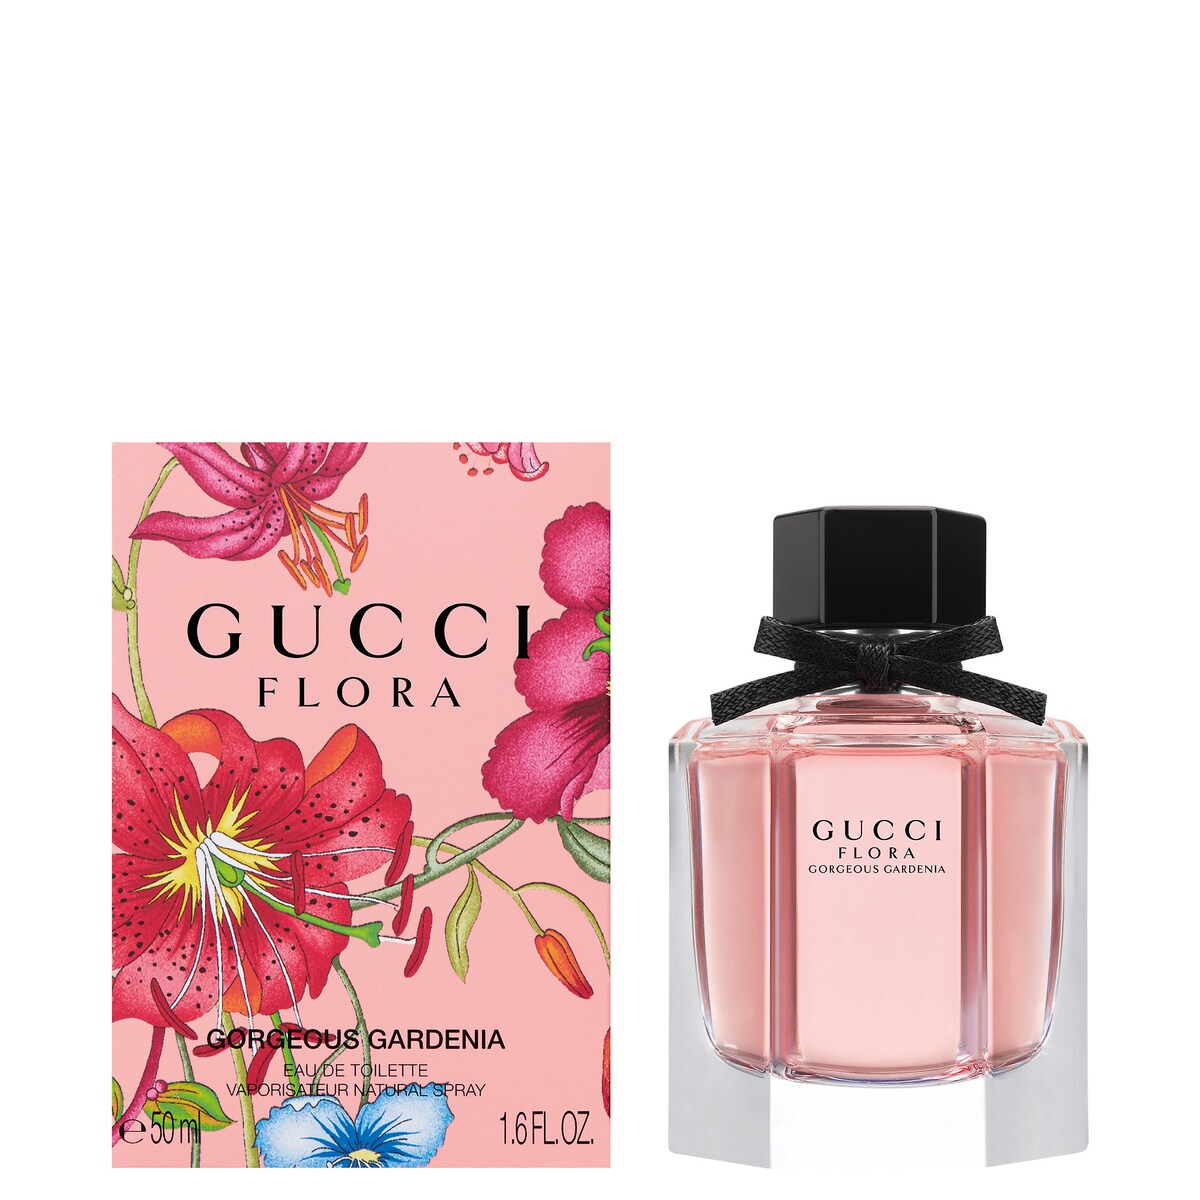 Gucci Flora By Gucci - Gorgeous Gardenia 1.7oz